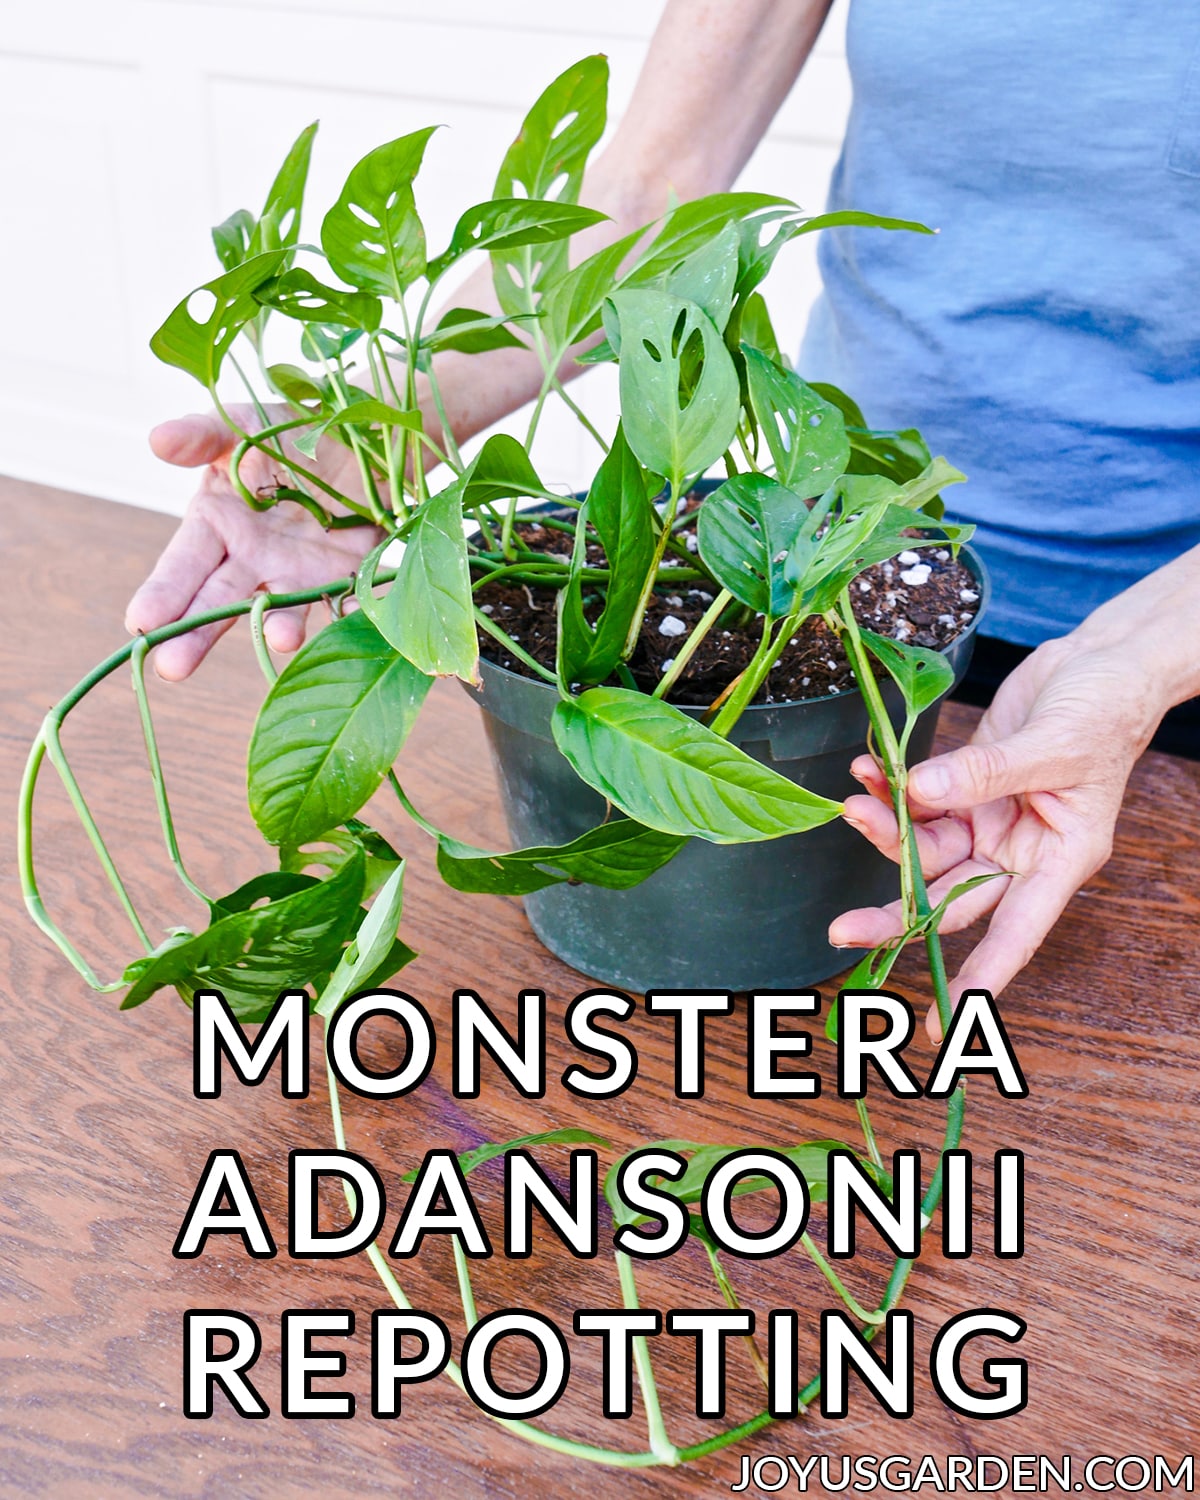  Monstera Adansonii Repotting: ល្បាយដីដែលត្រូវប្រើ &amp; ជំហានដើម្បីអនុវត្ត